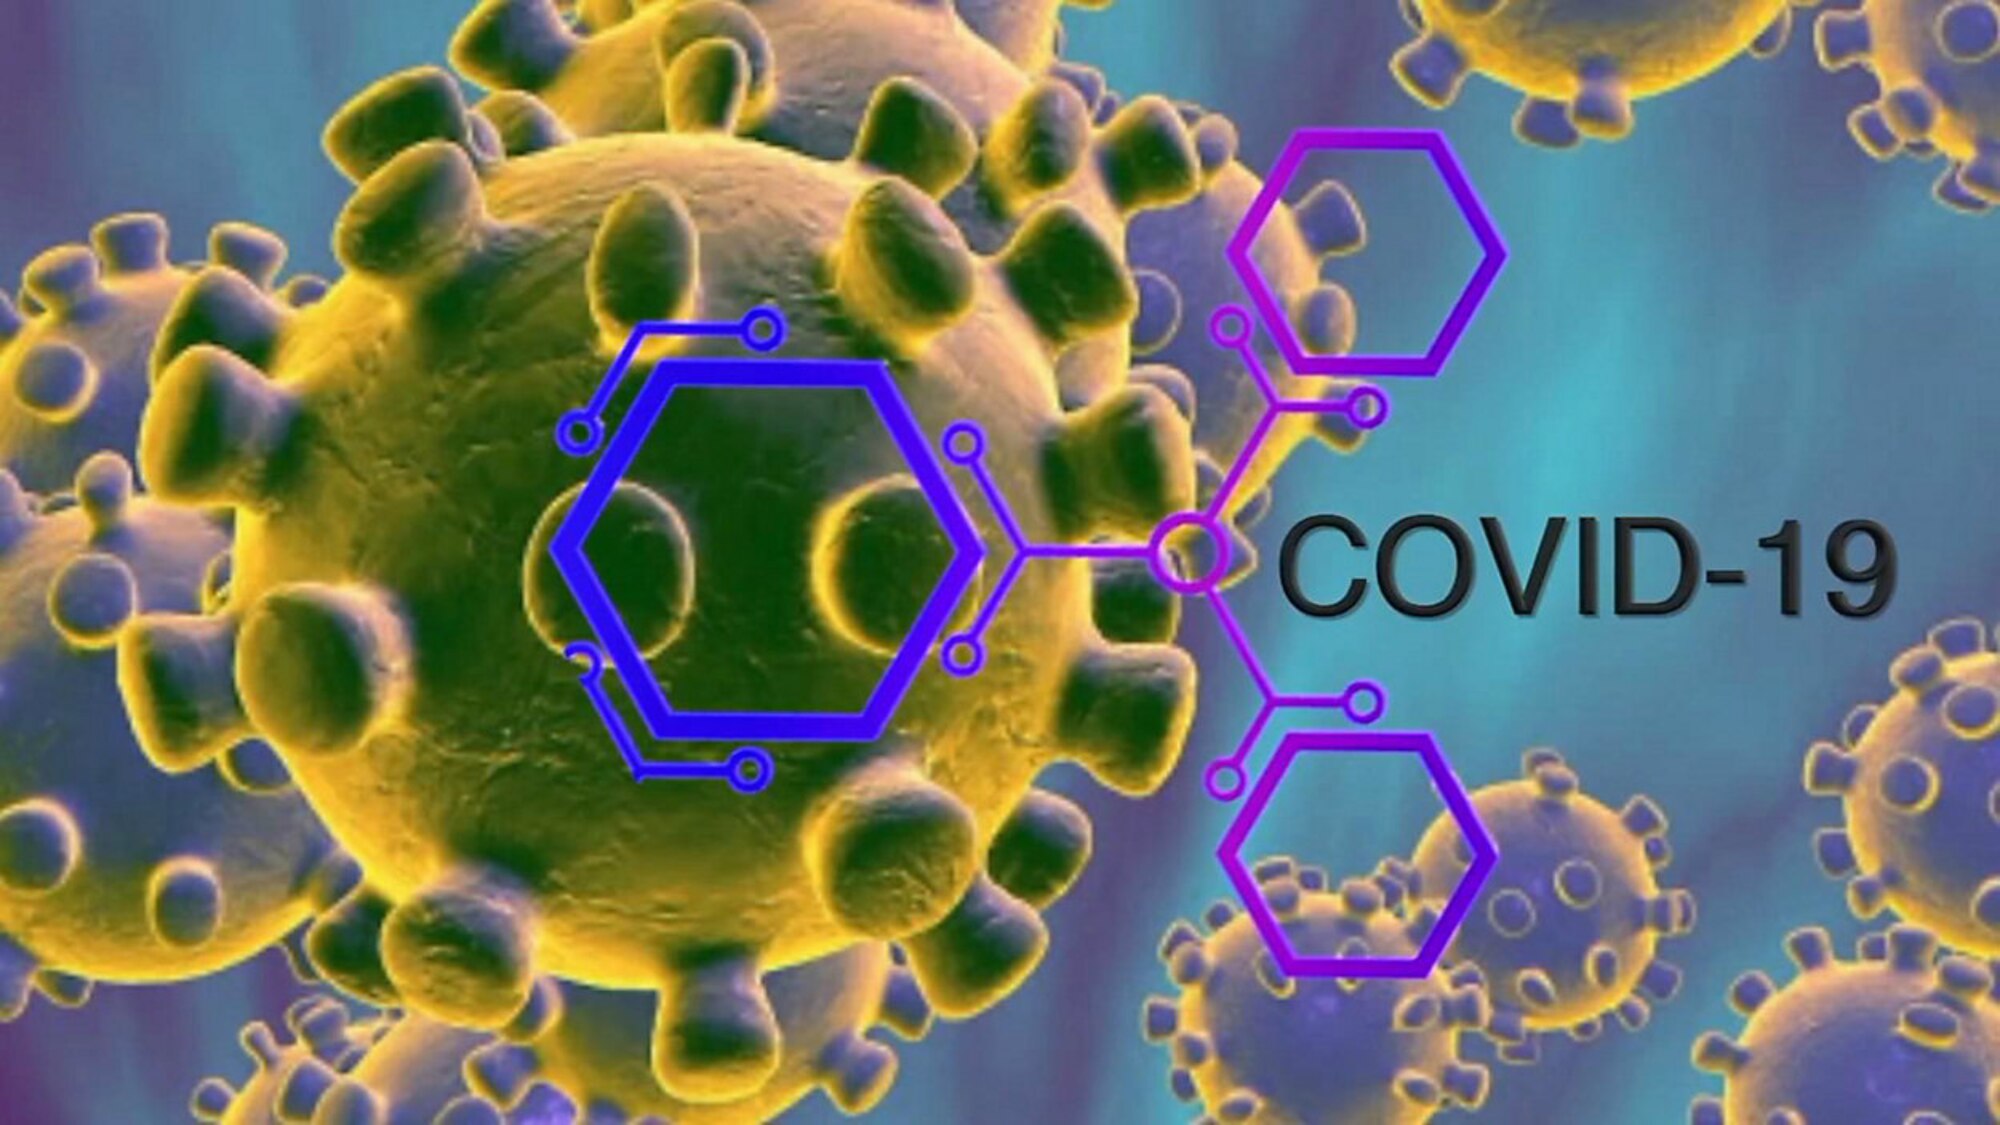 Graphic depicting the COVID-19 virus strain.